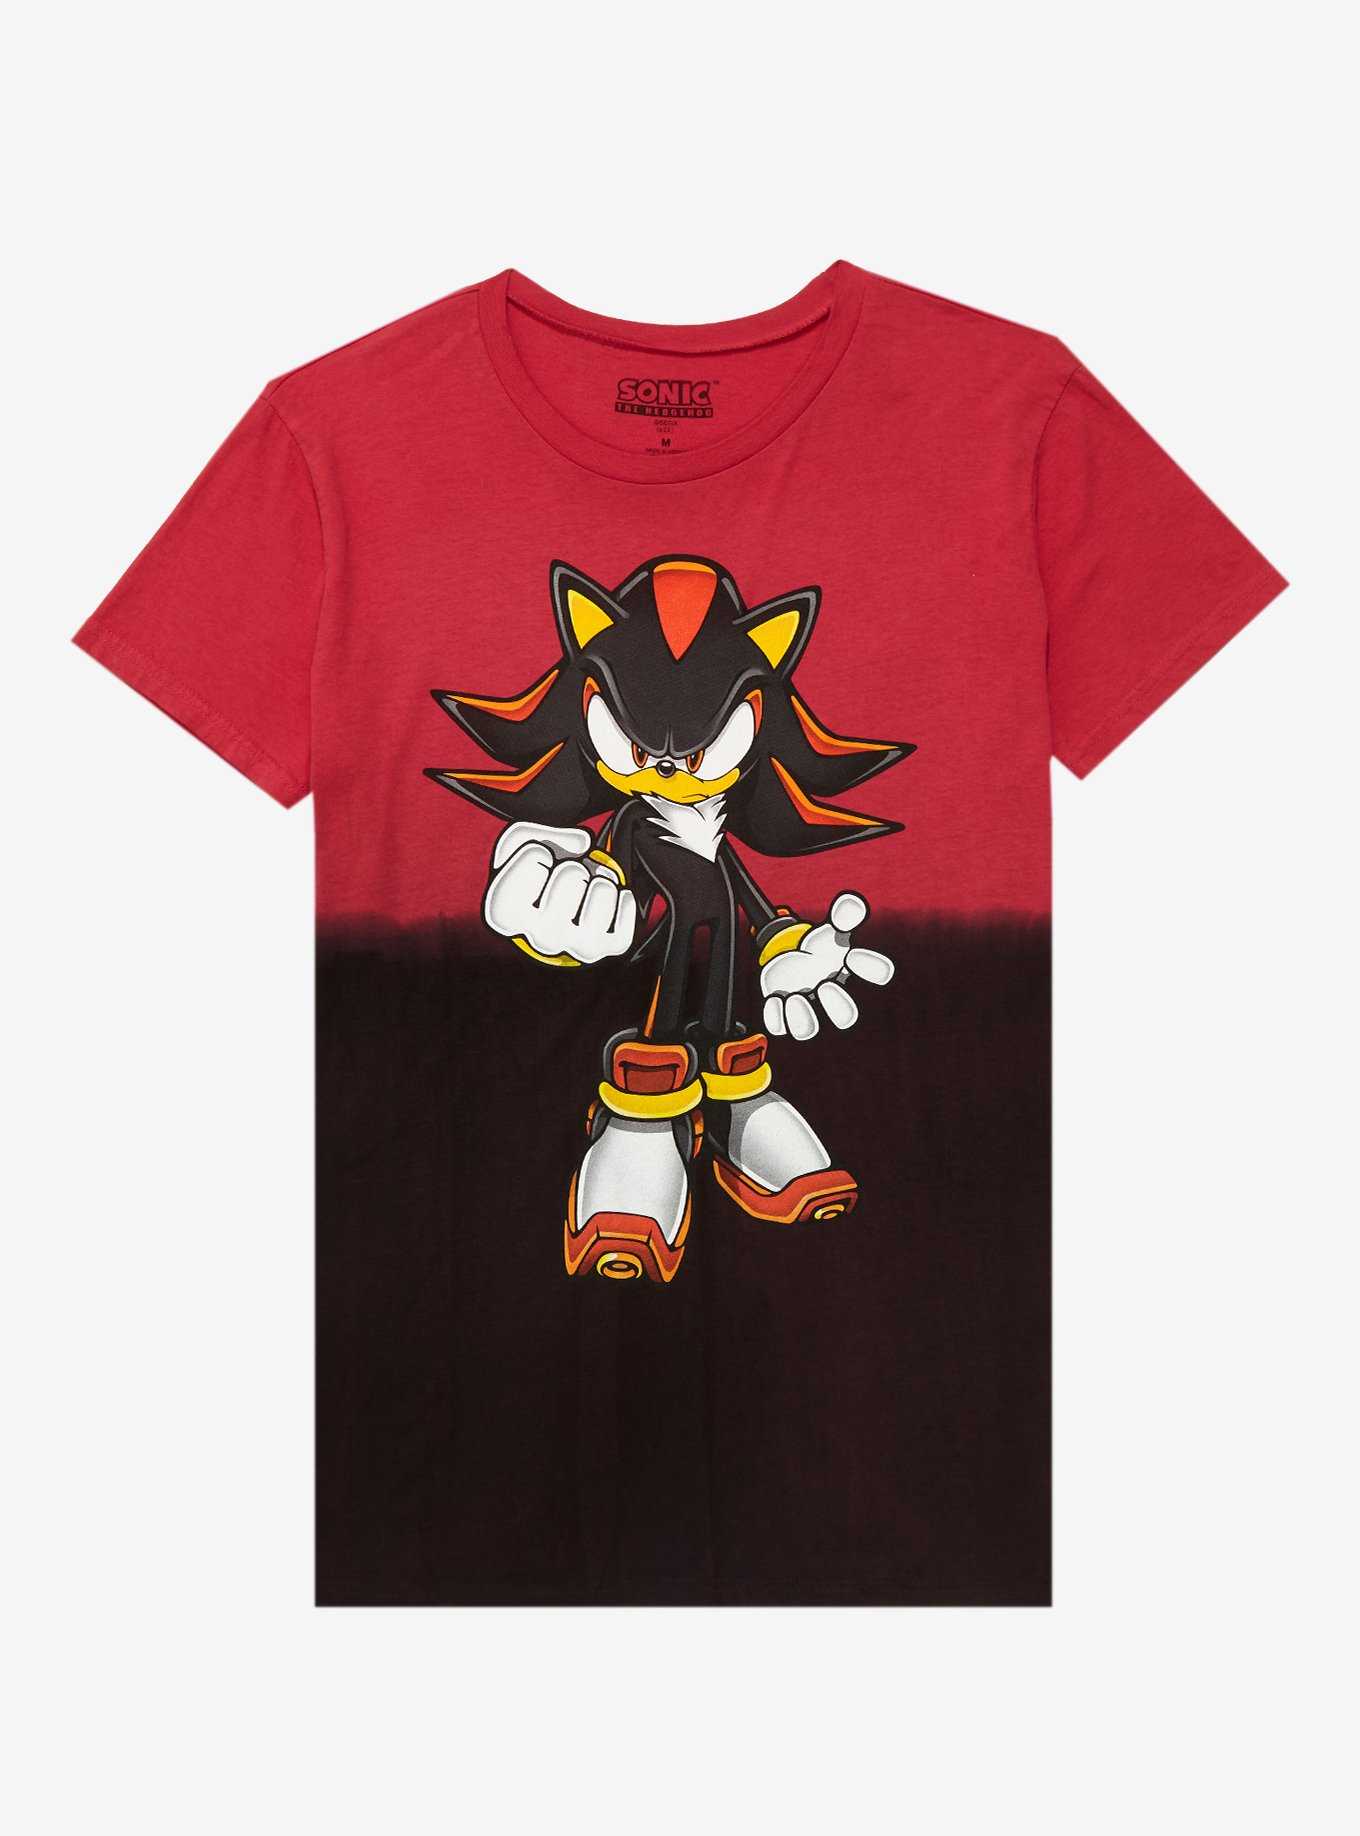 Sonic The Hedgehog Knuckles 94 Girls Oversized T-Shirt